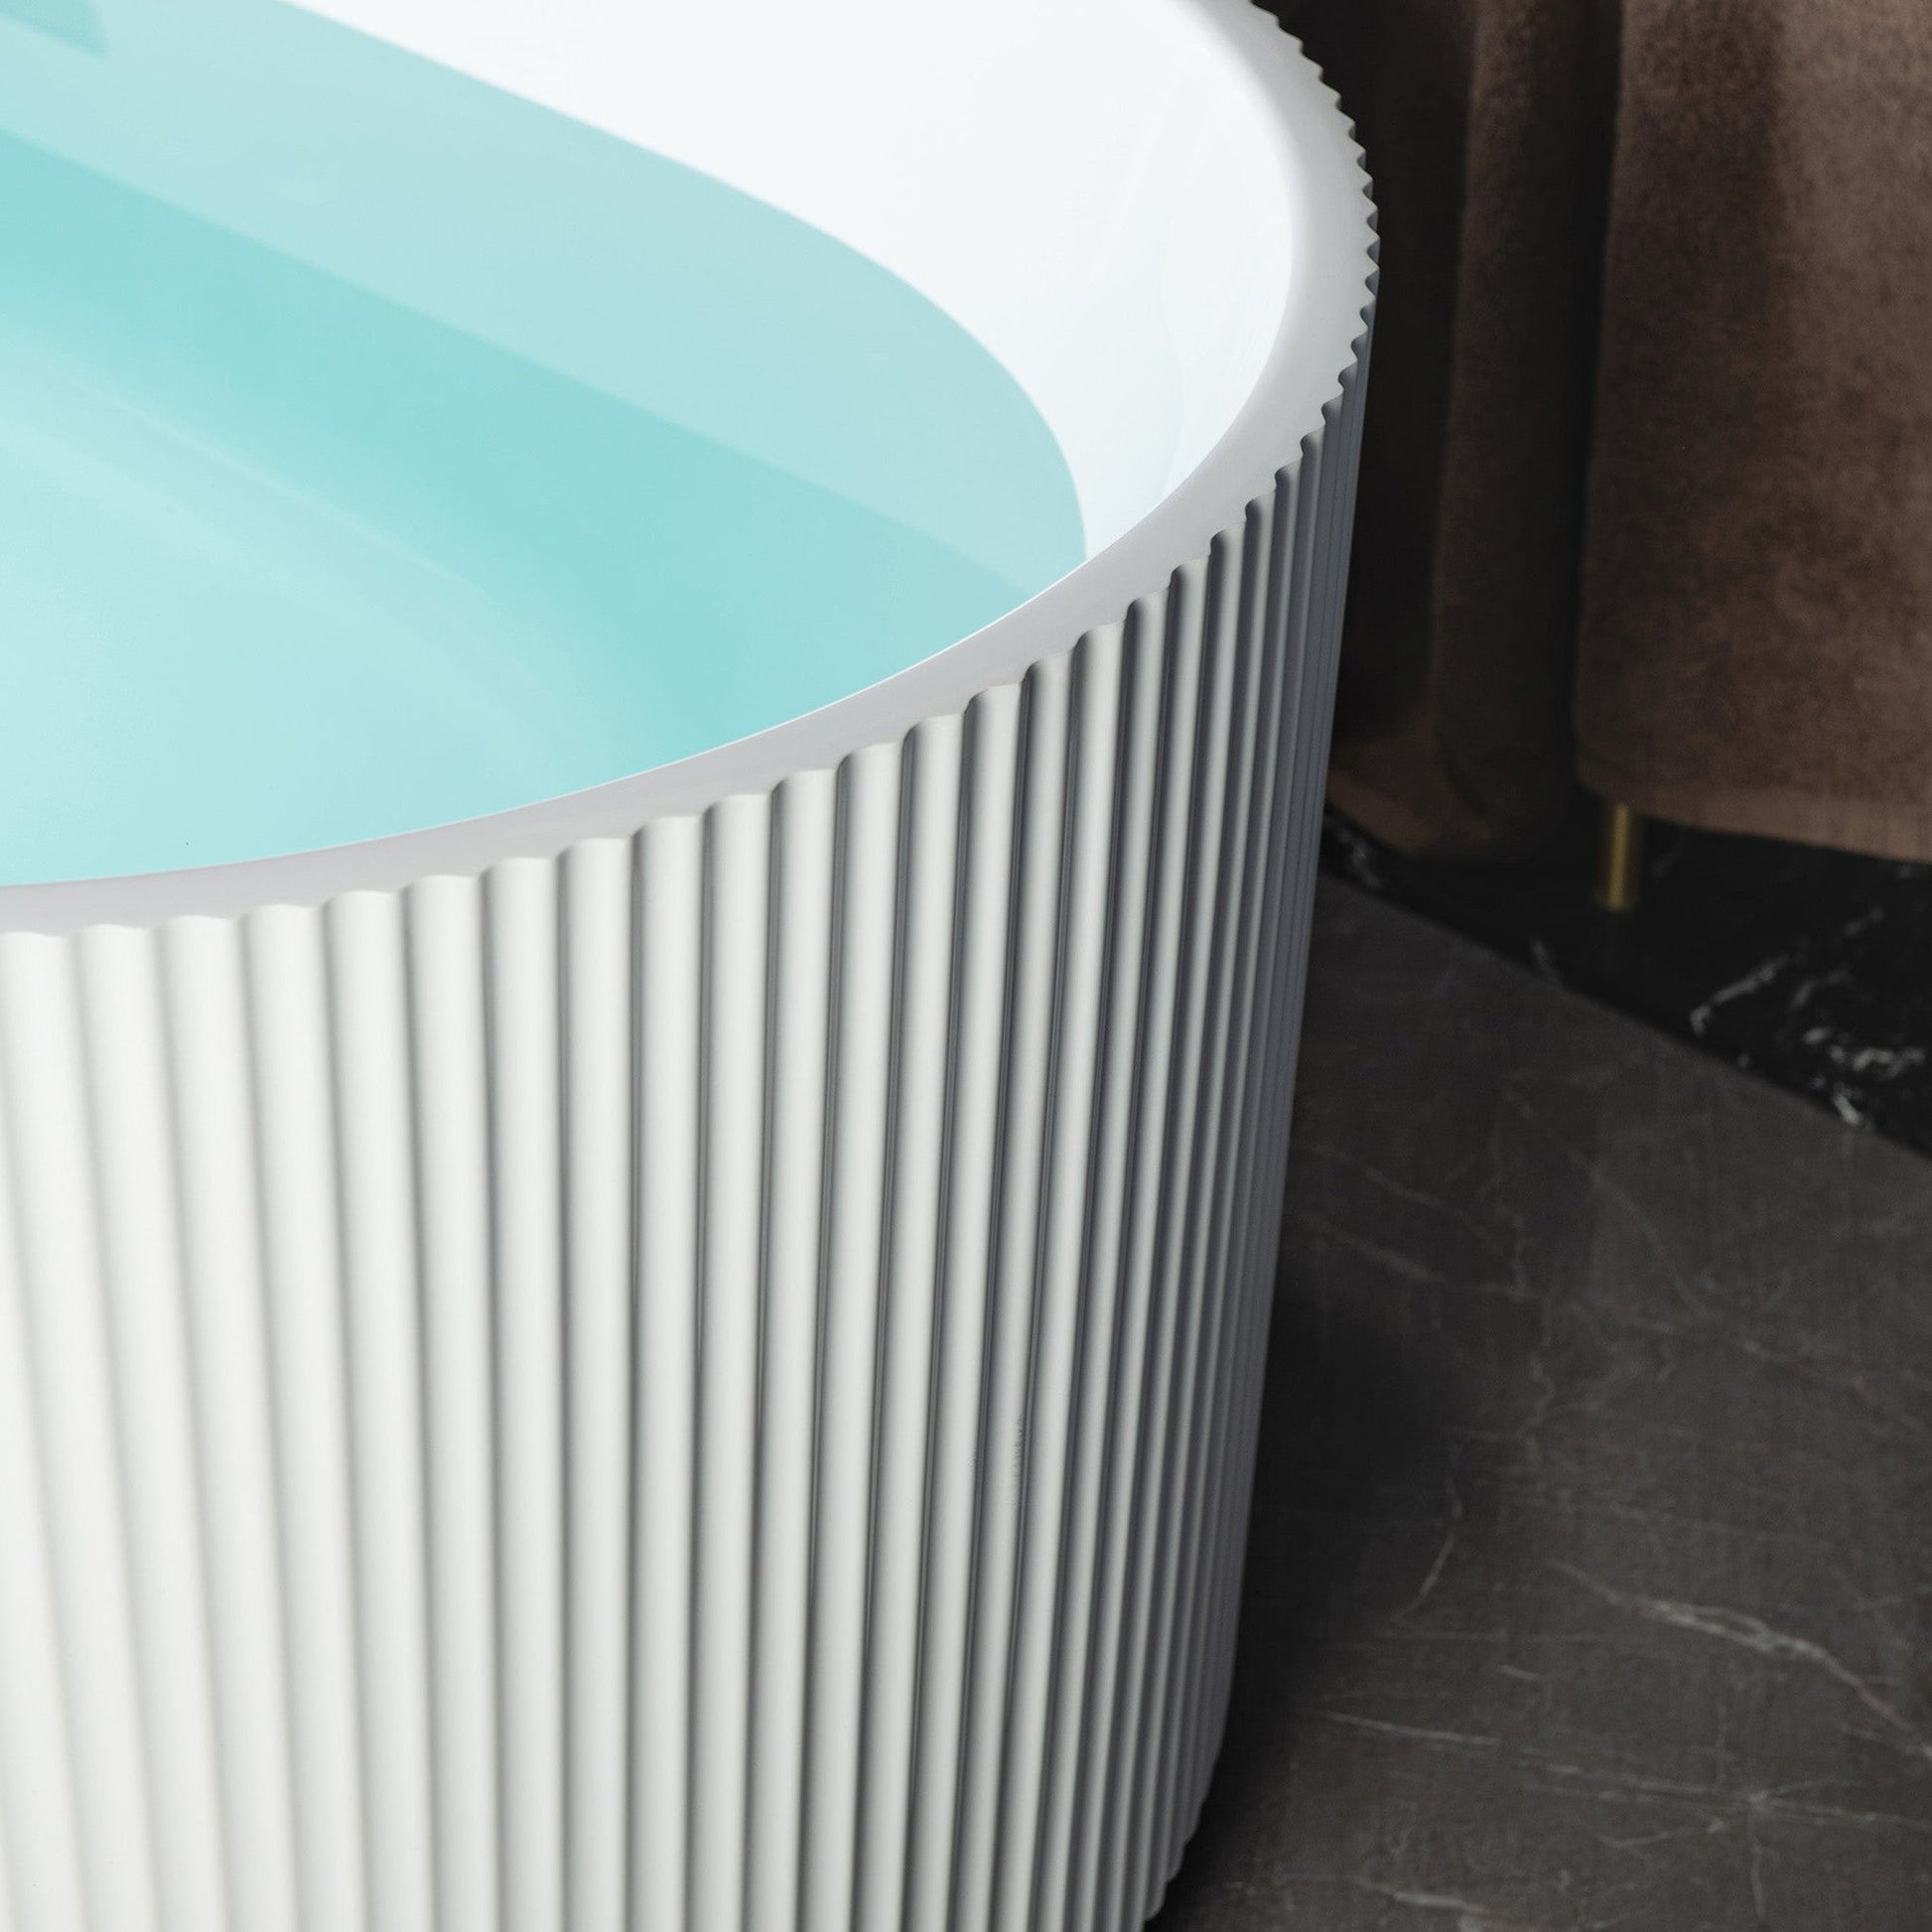 WoodBridge BTA1526 67" White Acrylic Freestanding Contemporary Soaking Bathtub With Chrome Overflow and Drain